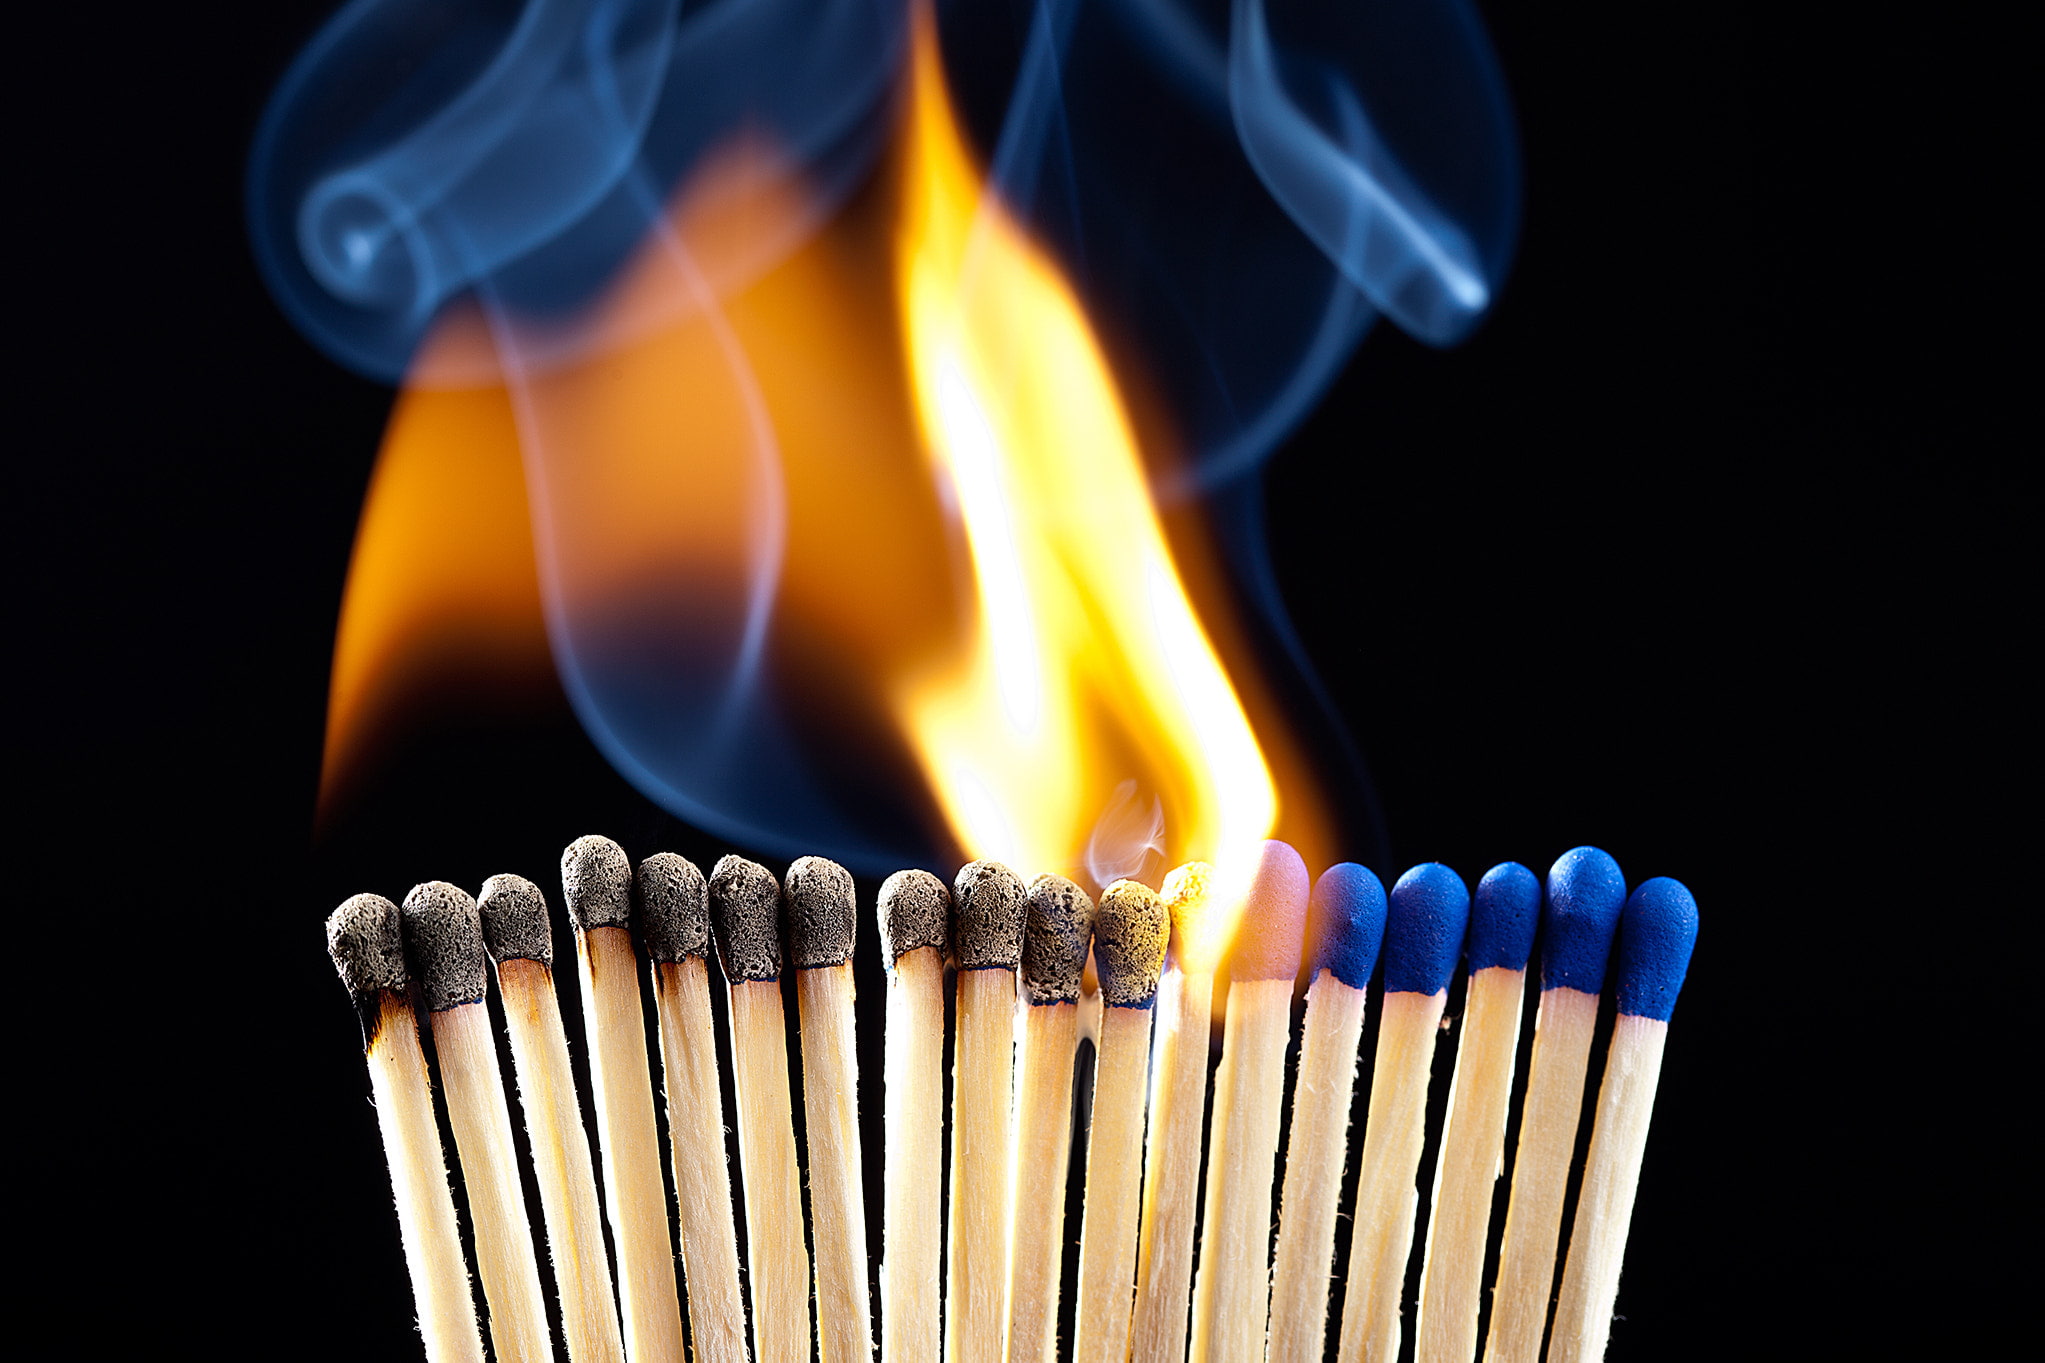 fire, yellow, black, blue, matches, smoke, flame, burning, fire - natural phenomenon